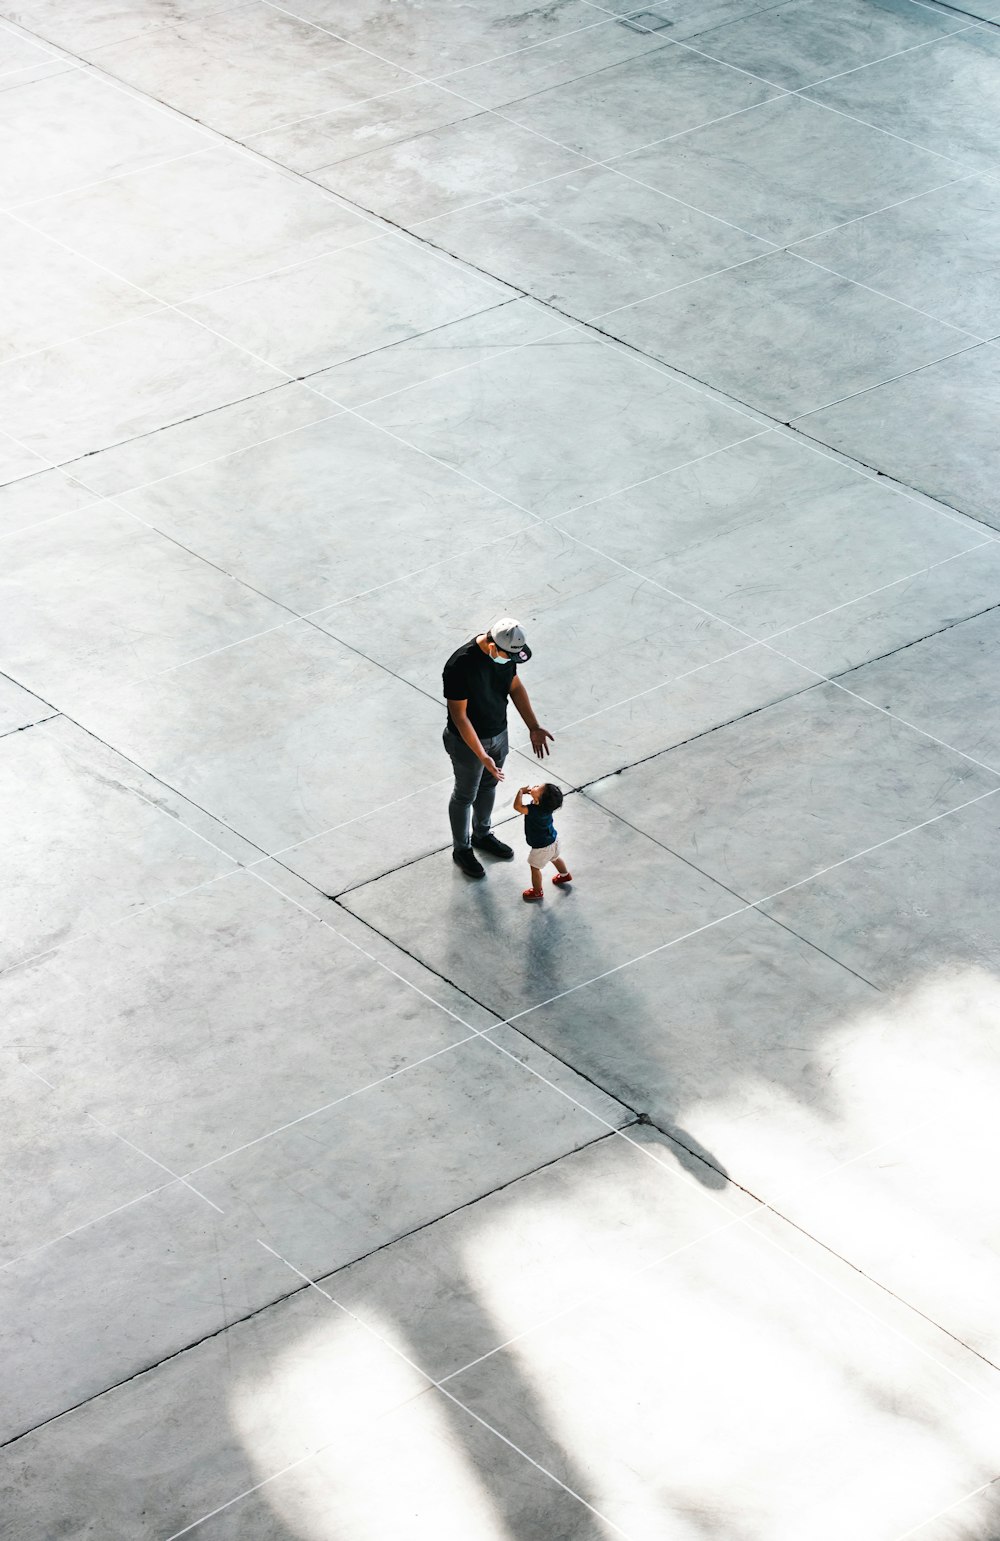 a man riding a skateboard down a cement walkway